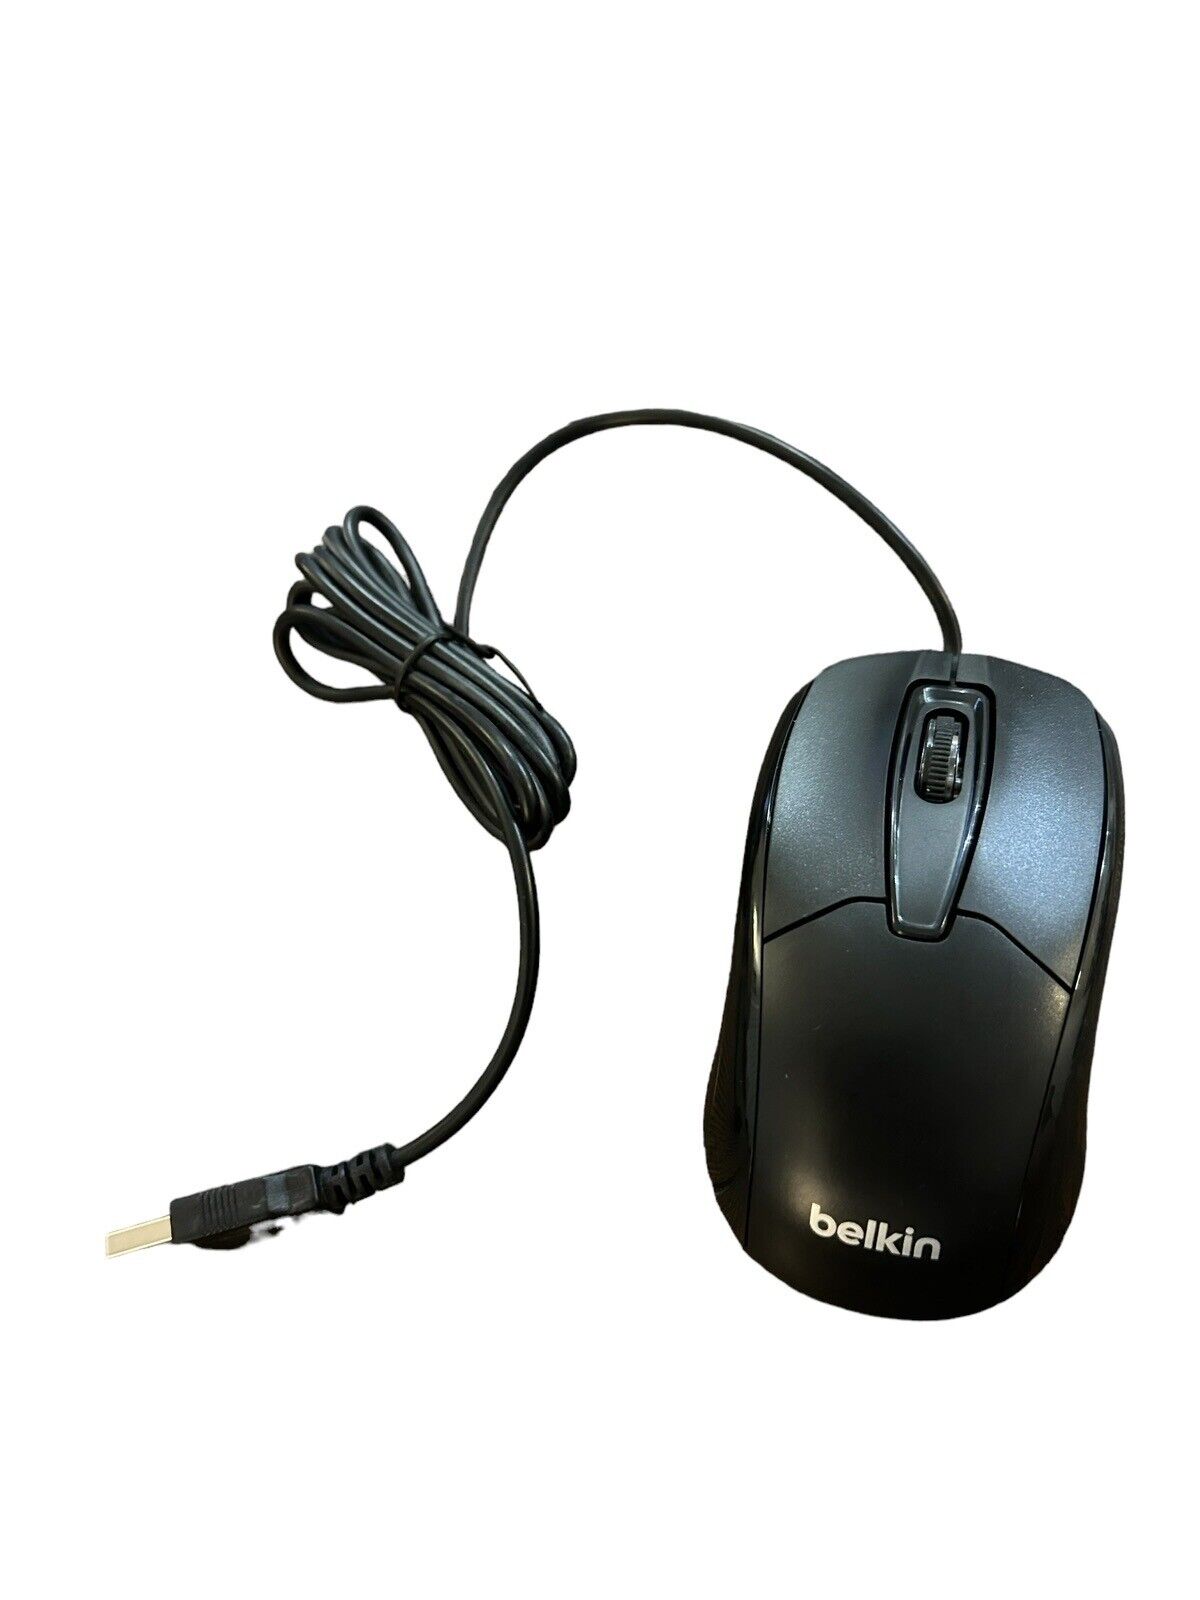 Belkin USB Wired Ergonomic Optical Scroll Mouse BLACK F5M010qBLK EUC